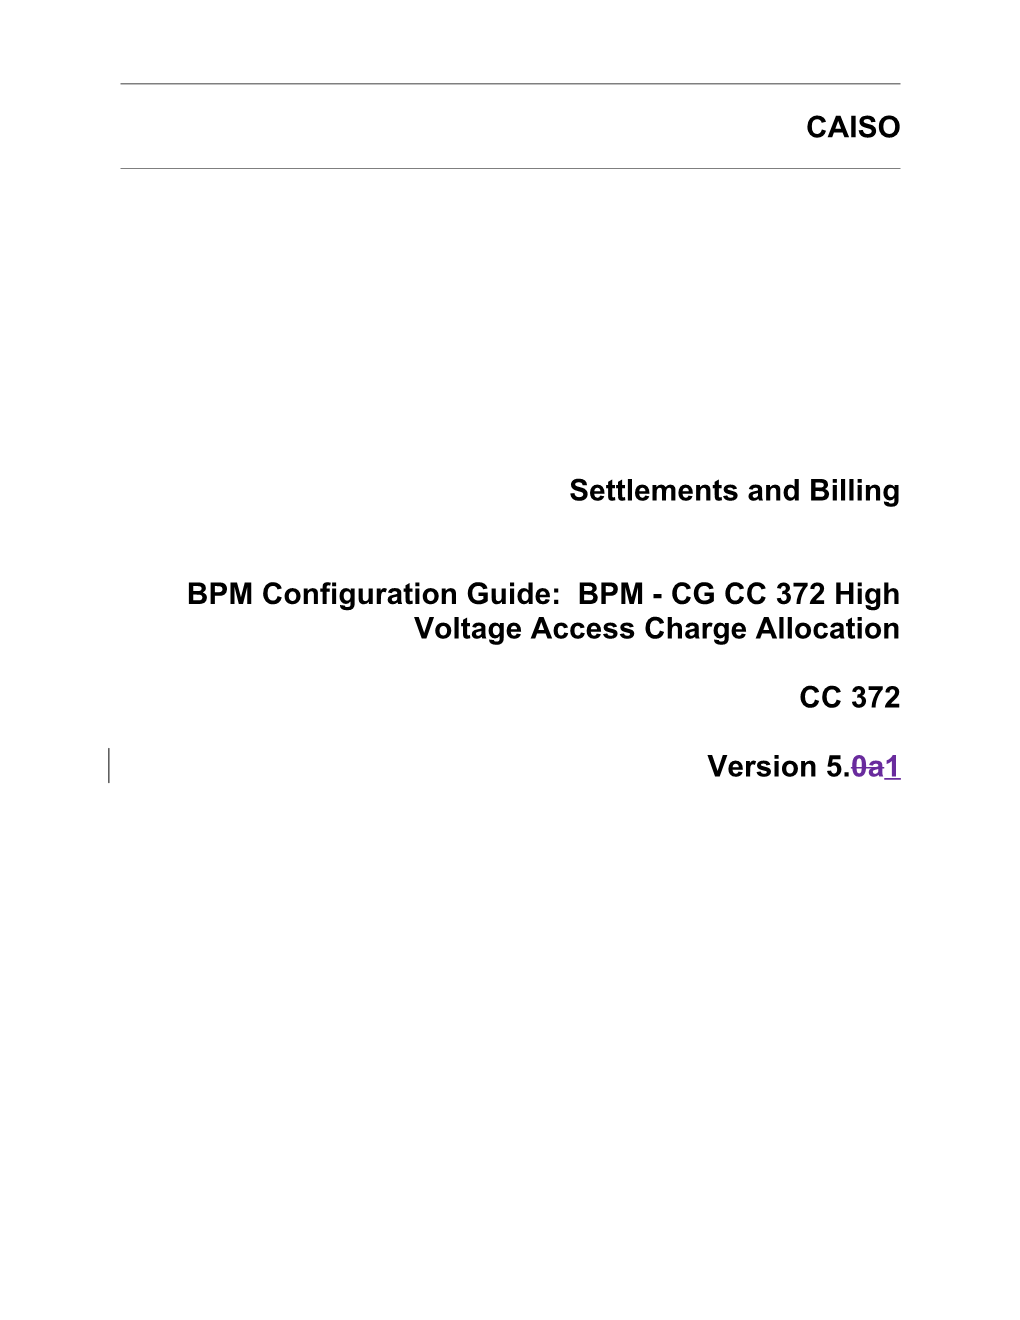 BPM - CG CC 372 High Voltage Access Charge Allocation